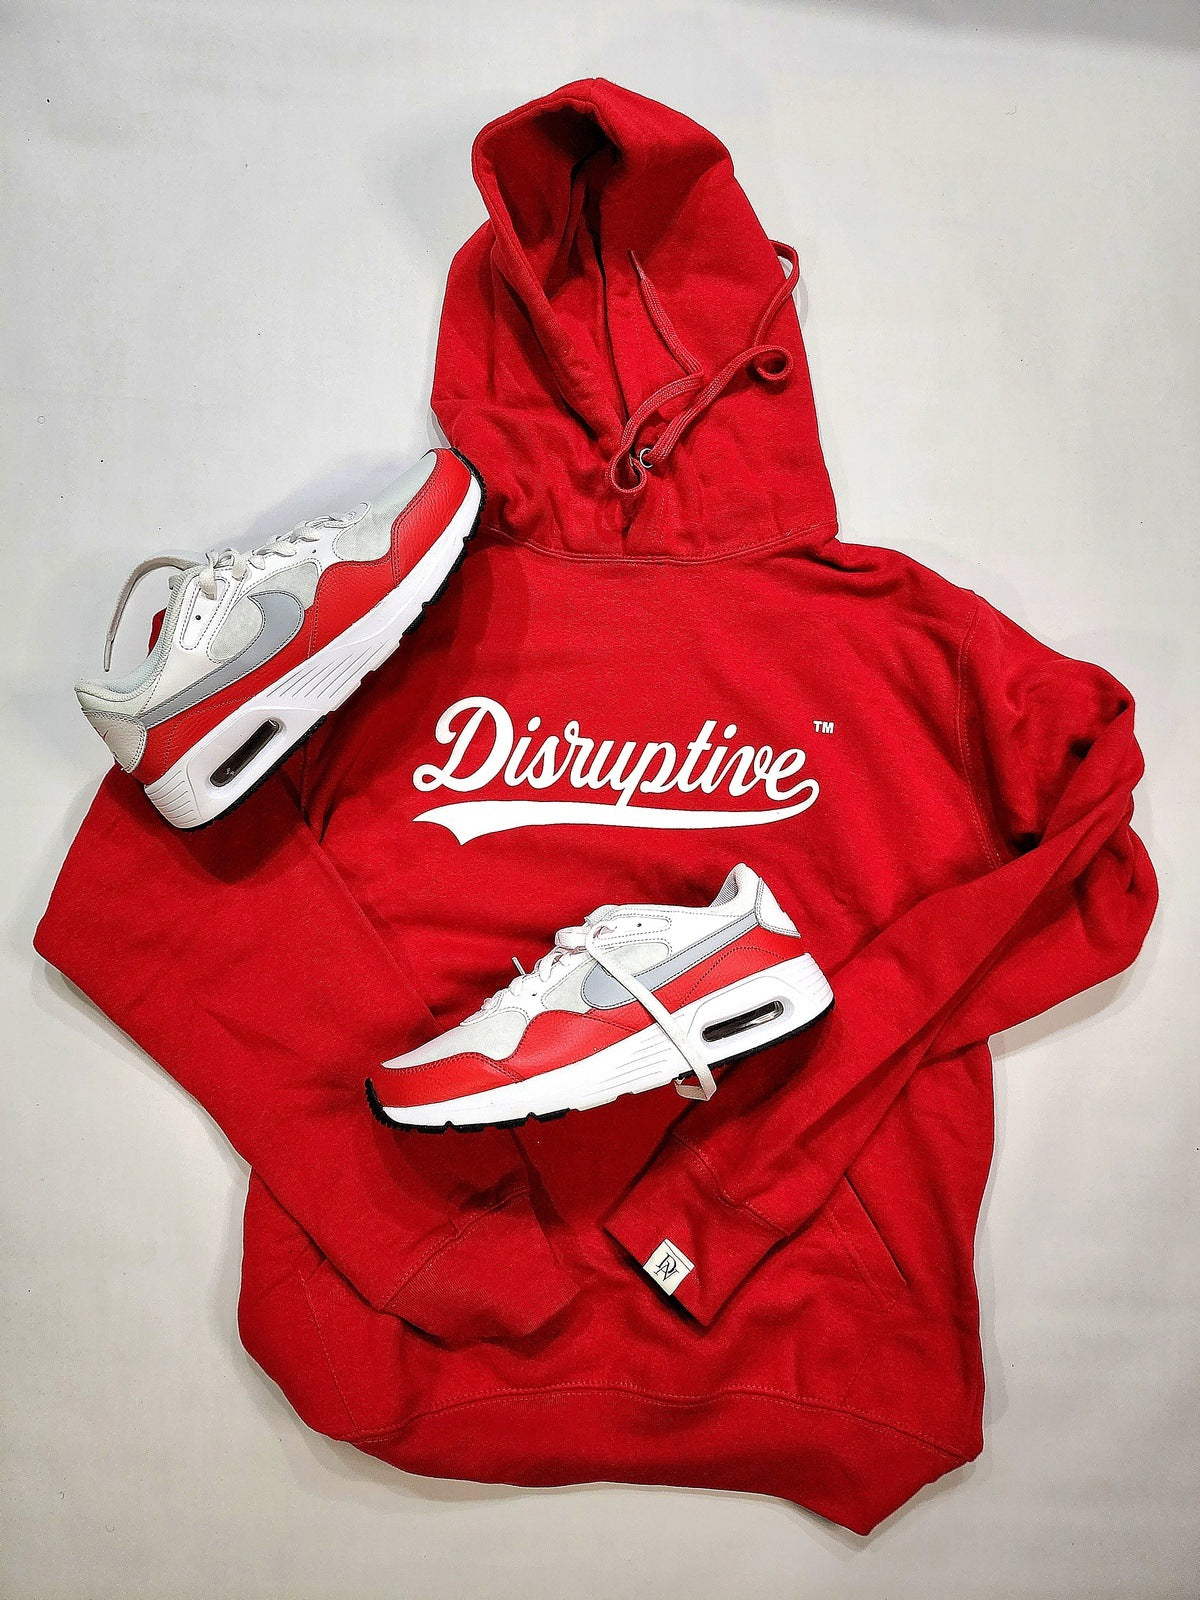 Disruptive "Swoosh" Red/White Set